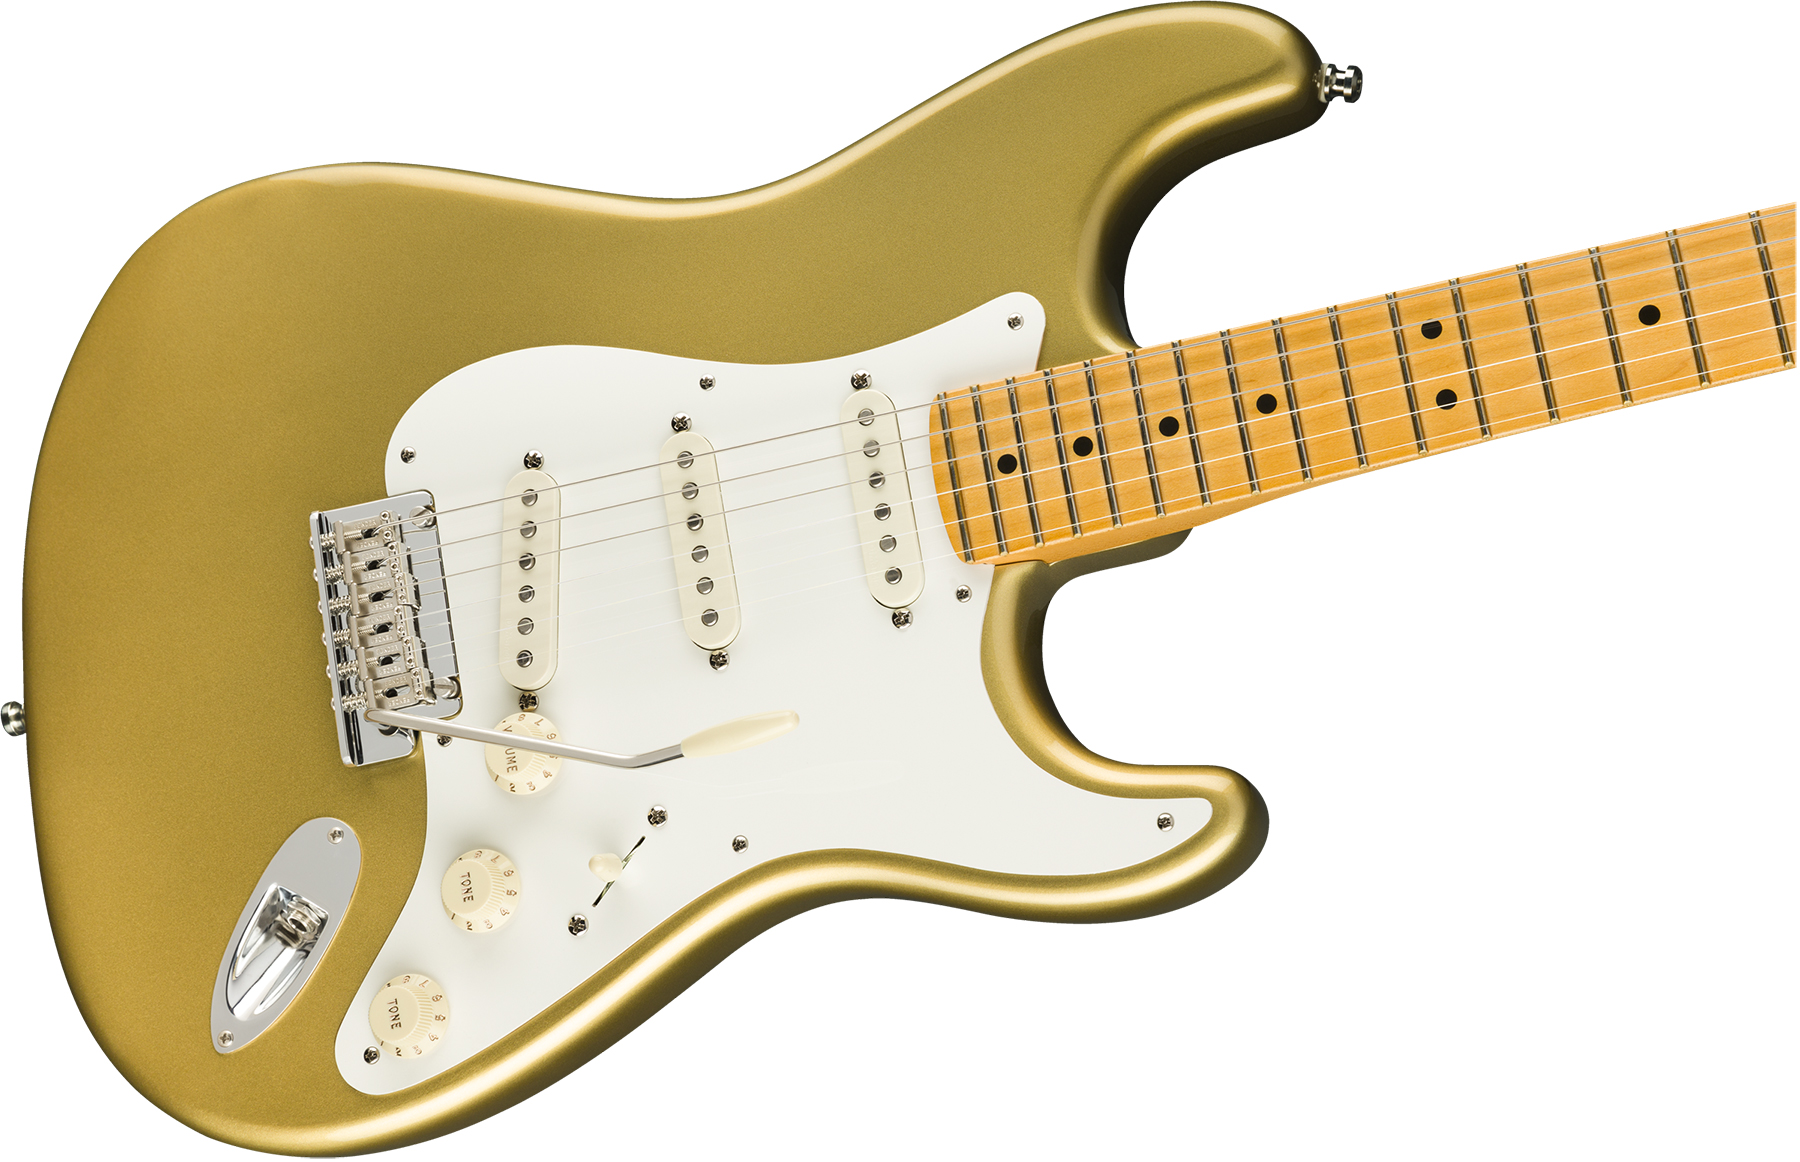 Fender Strat Lincoln Brewster Usa Signature Mn - Aztec Gold - E-Gitarre in Str-Form - Variation 2